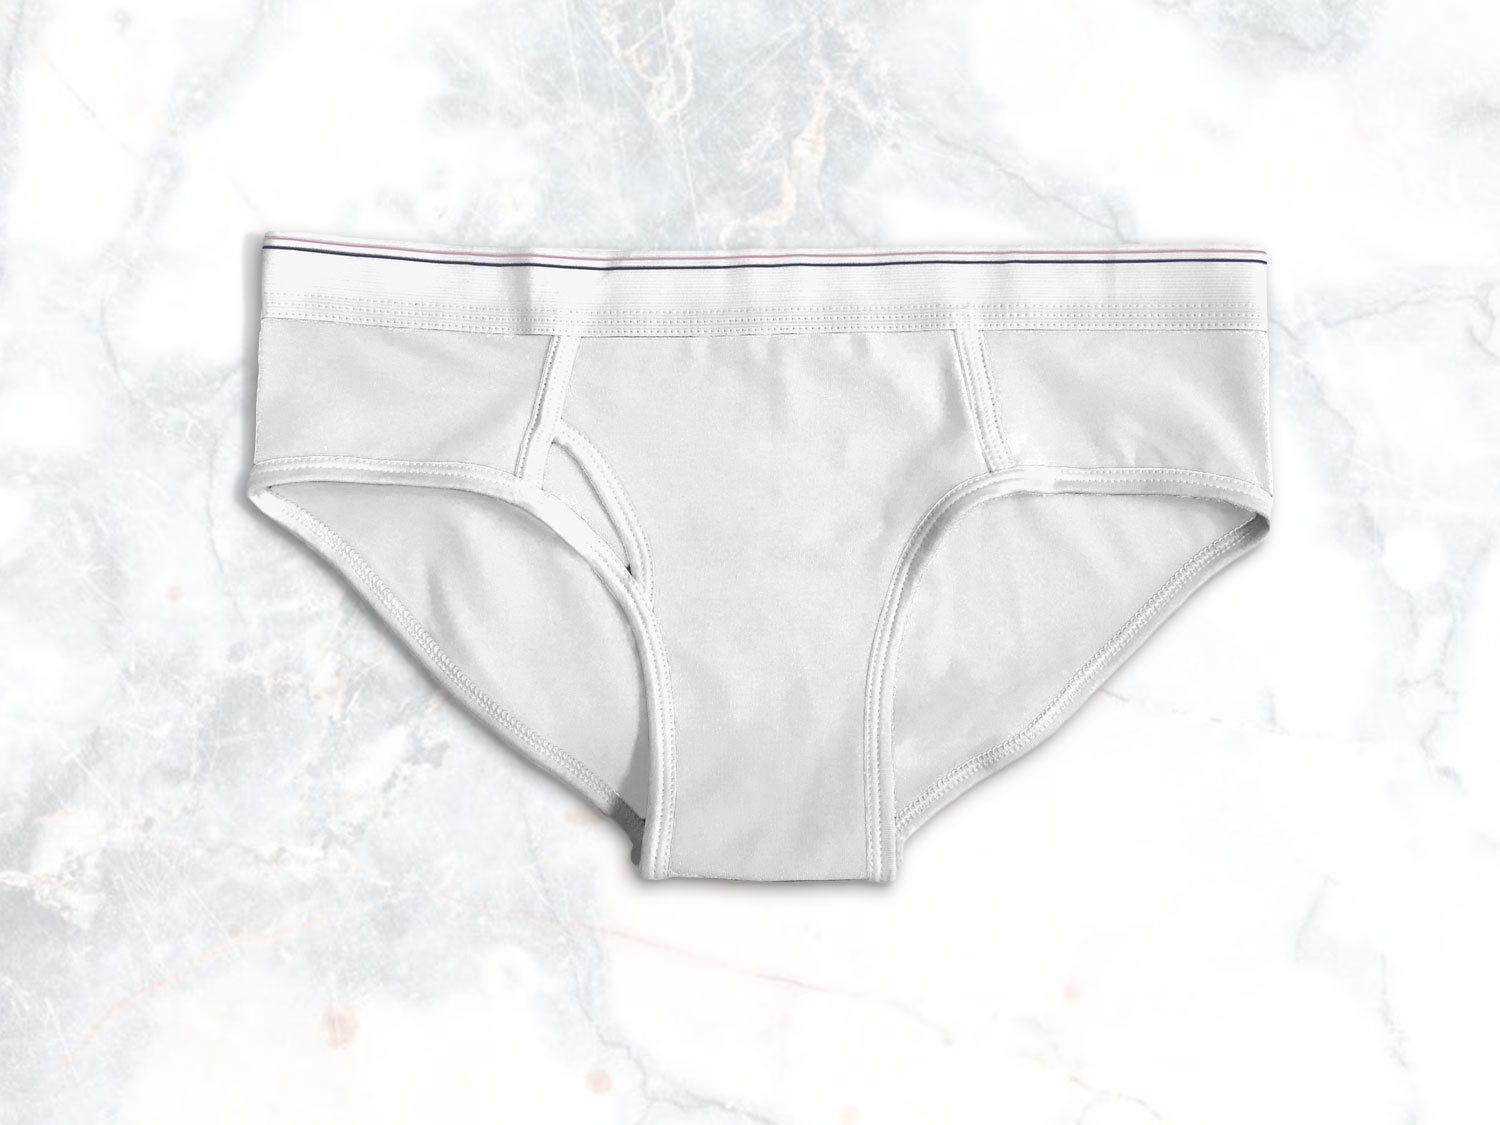 Mens underwear mockup free information